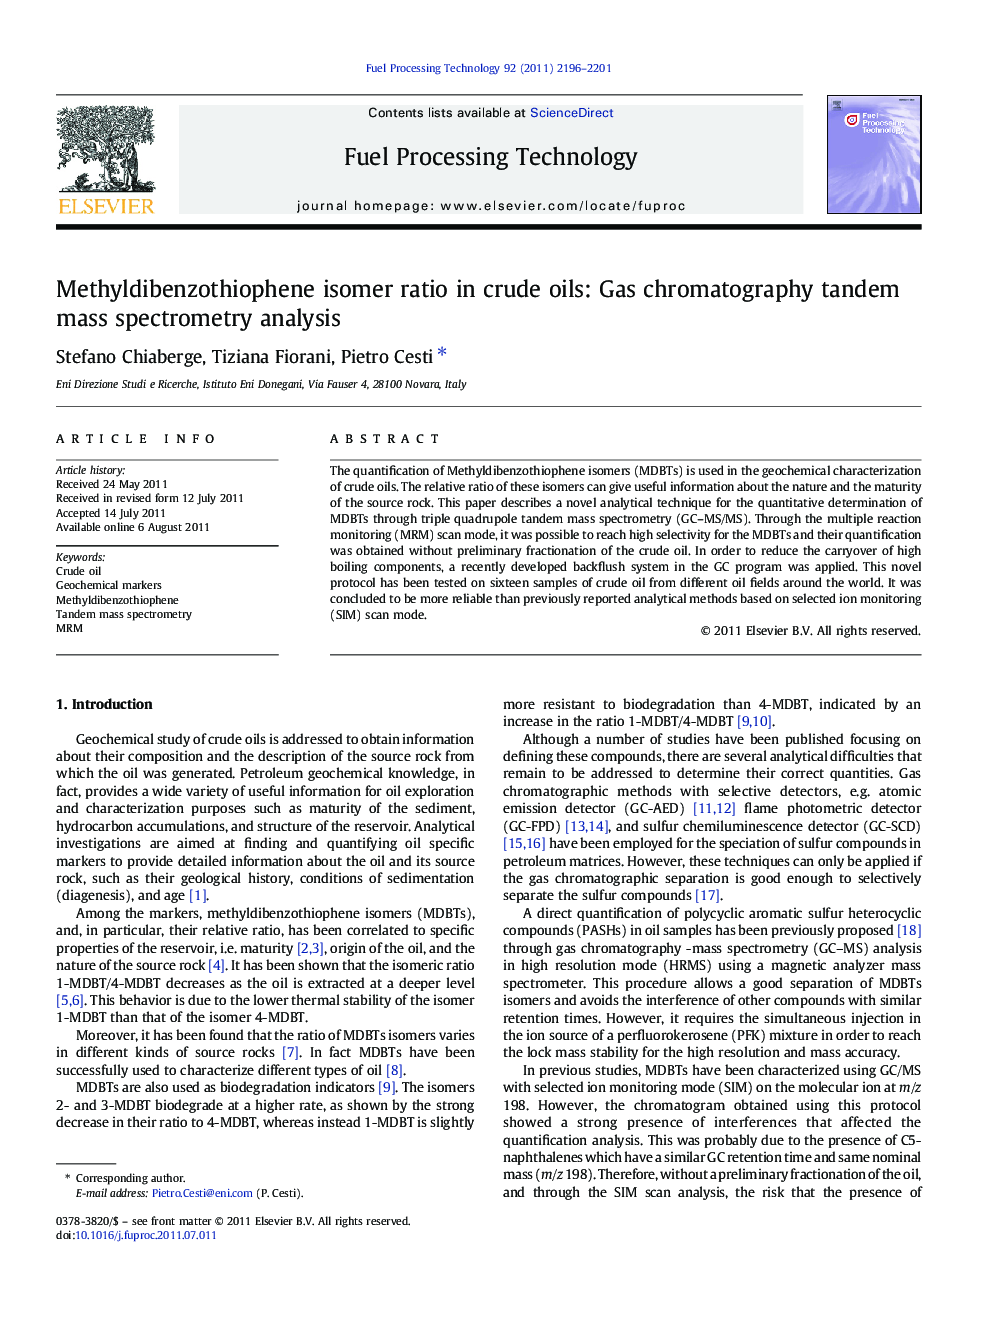 Methyldibenzothiophene isomer ratio in crude oils: Gas chromatography tandem mass spectrometry analysis